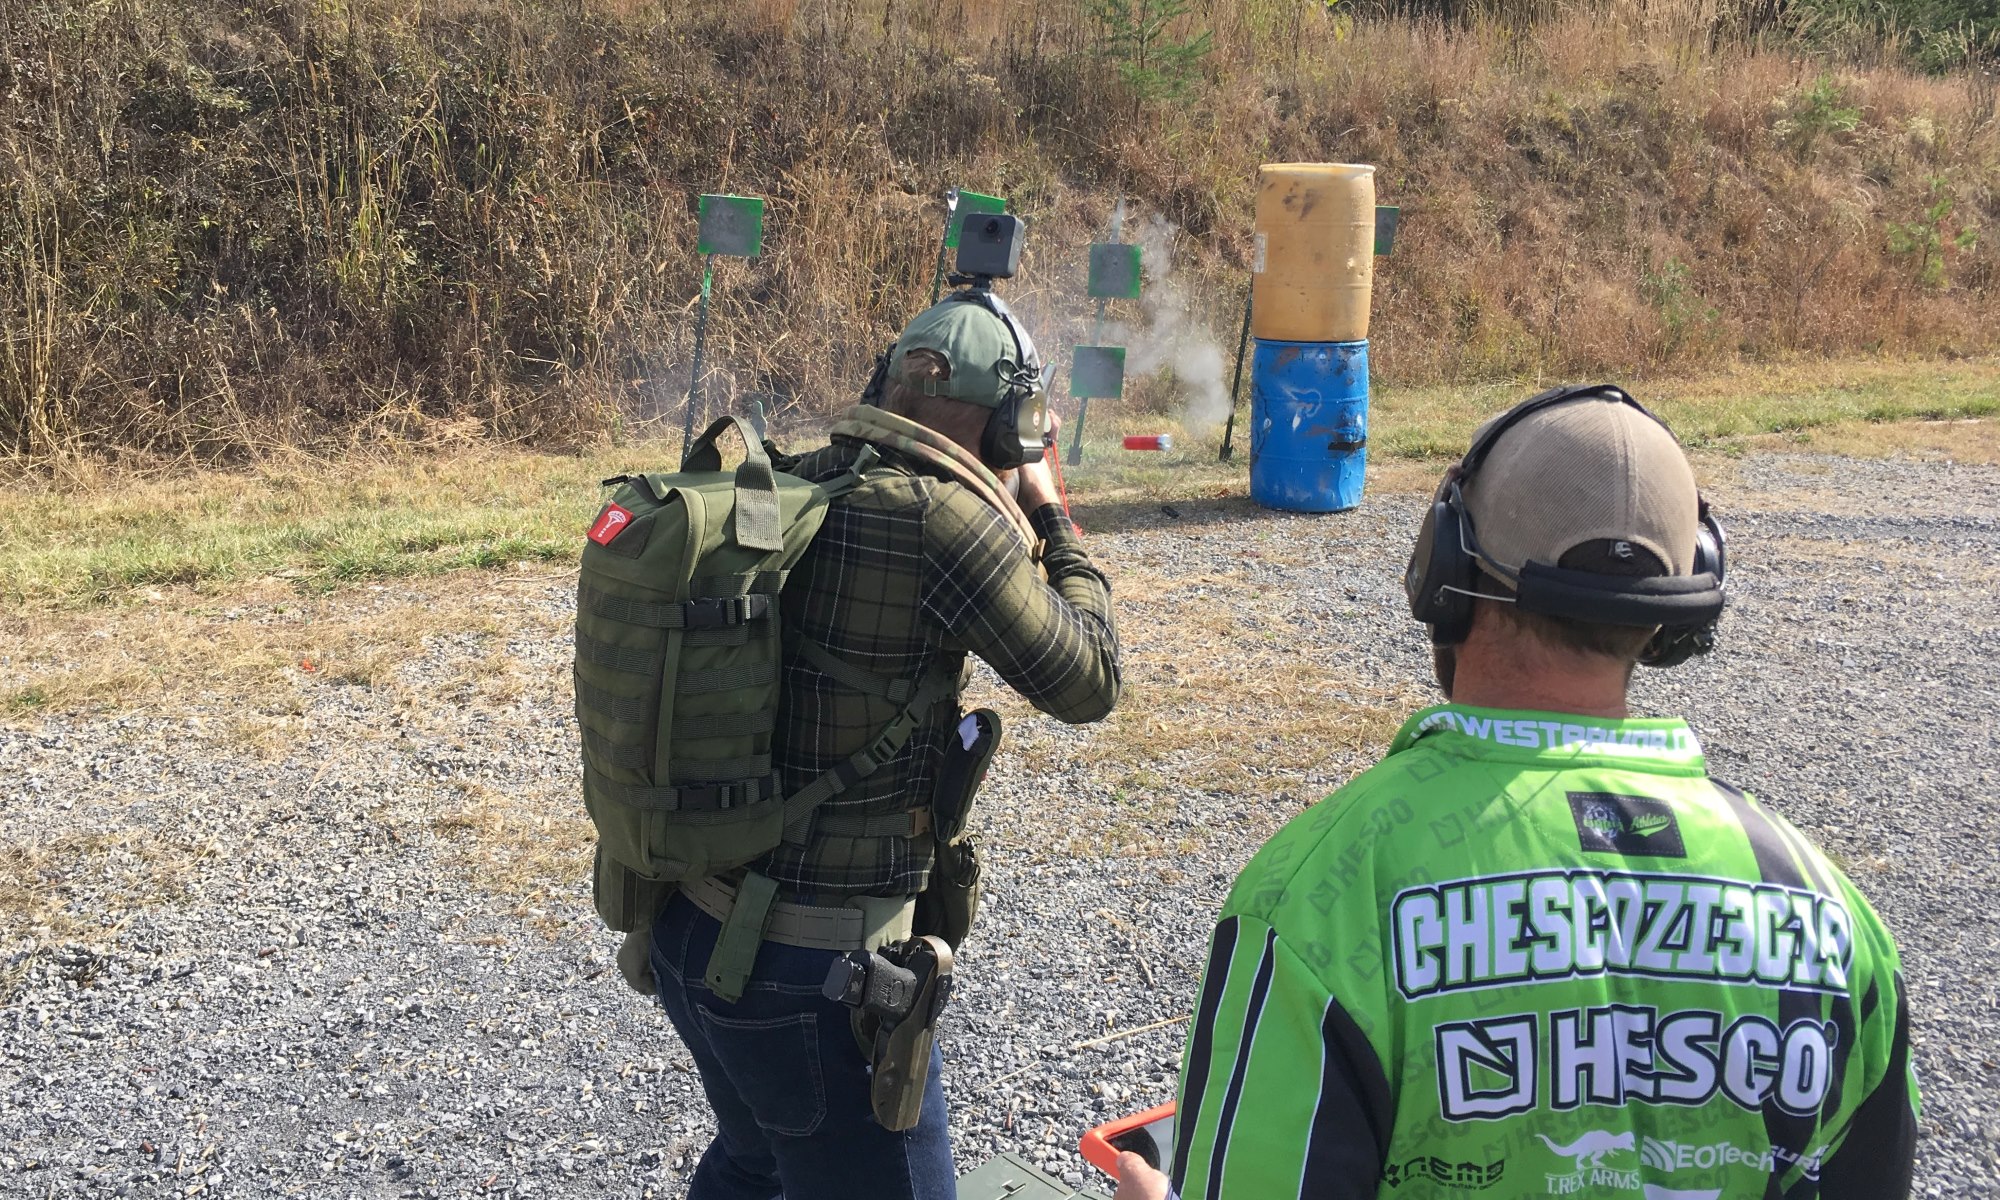 A man shooting at rectangular green targets standing up.